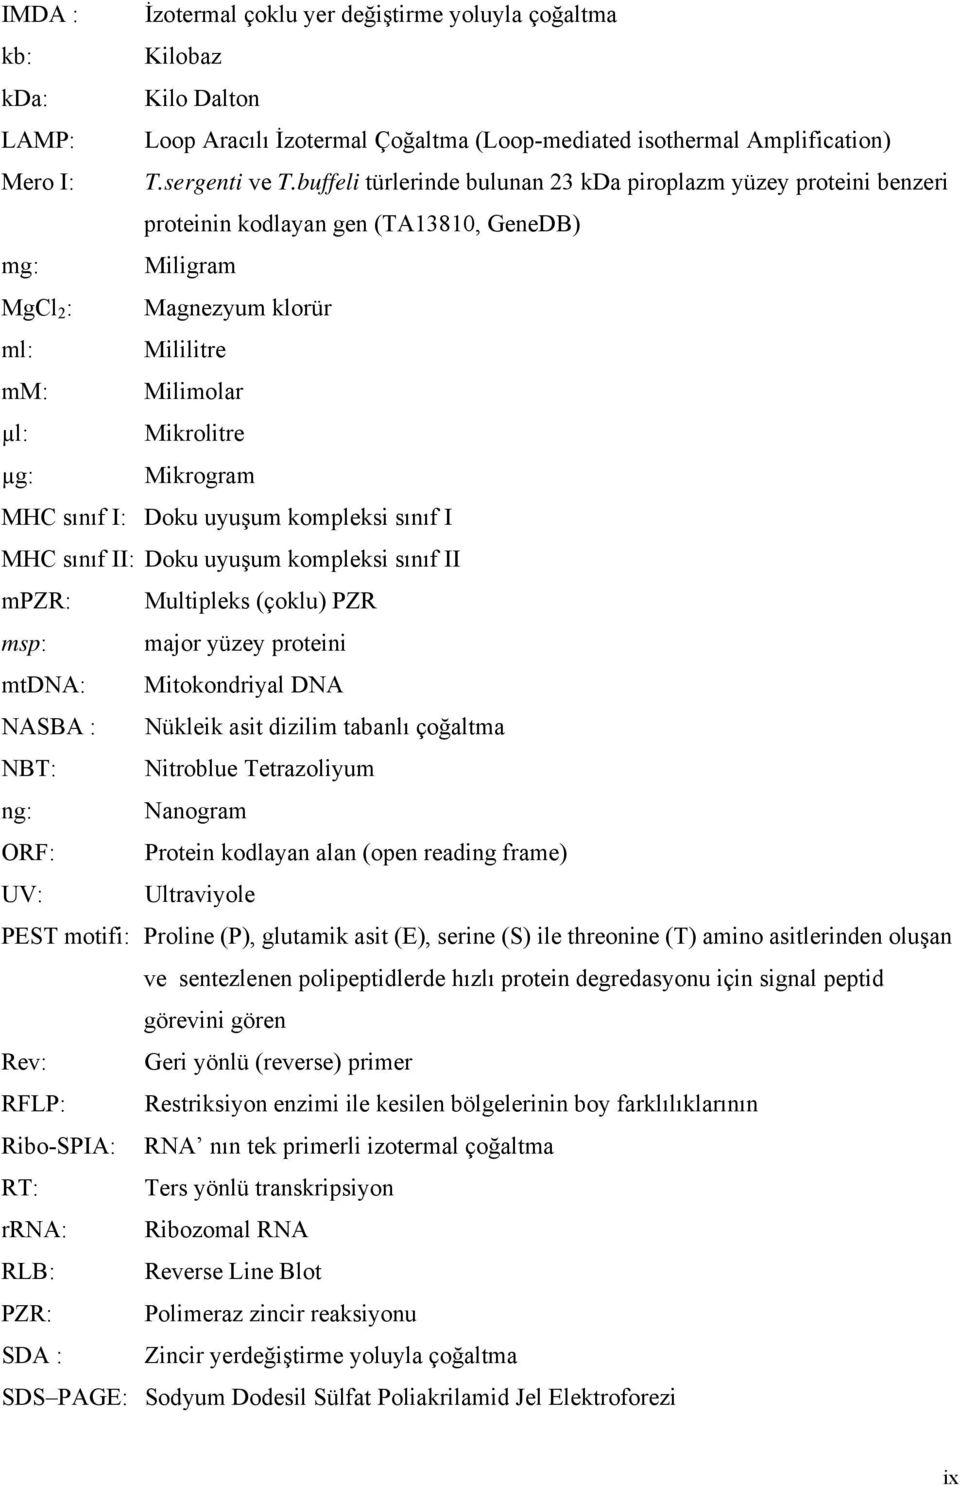 Mikrogram MHC sınıf I: Doku uyuşum kompleksi sınıf I MHC sınıf II: Doku uyuşum kompleksi sınıf II mpzr: Multipleks (çoklu) PZR msp: major yüzey proteini mtdna: Mitokondriyal DNA NASBA : Nükleik asit